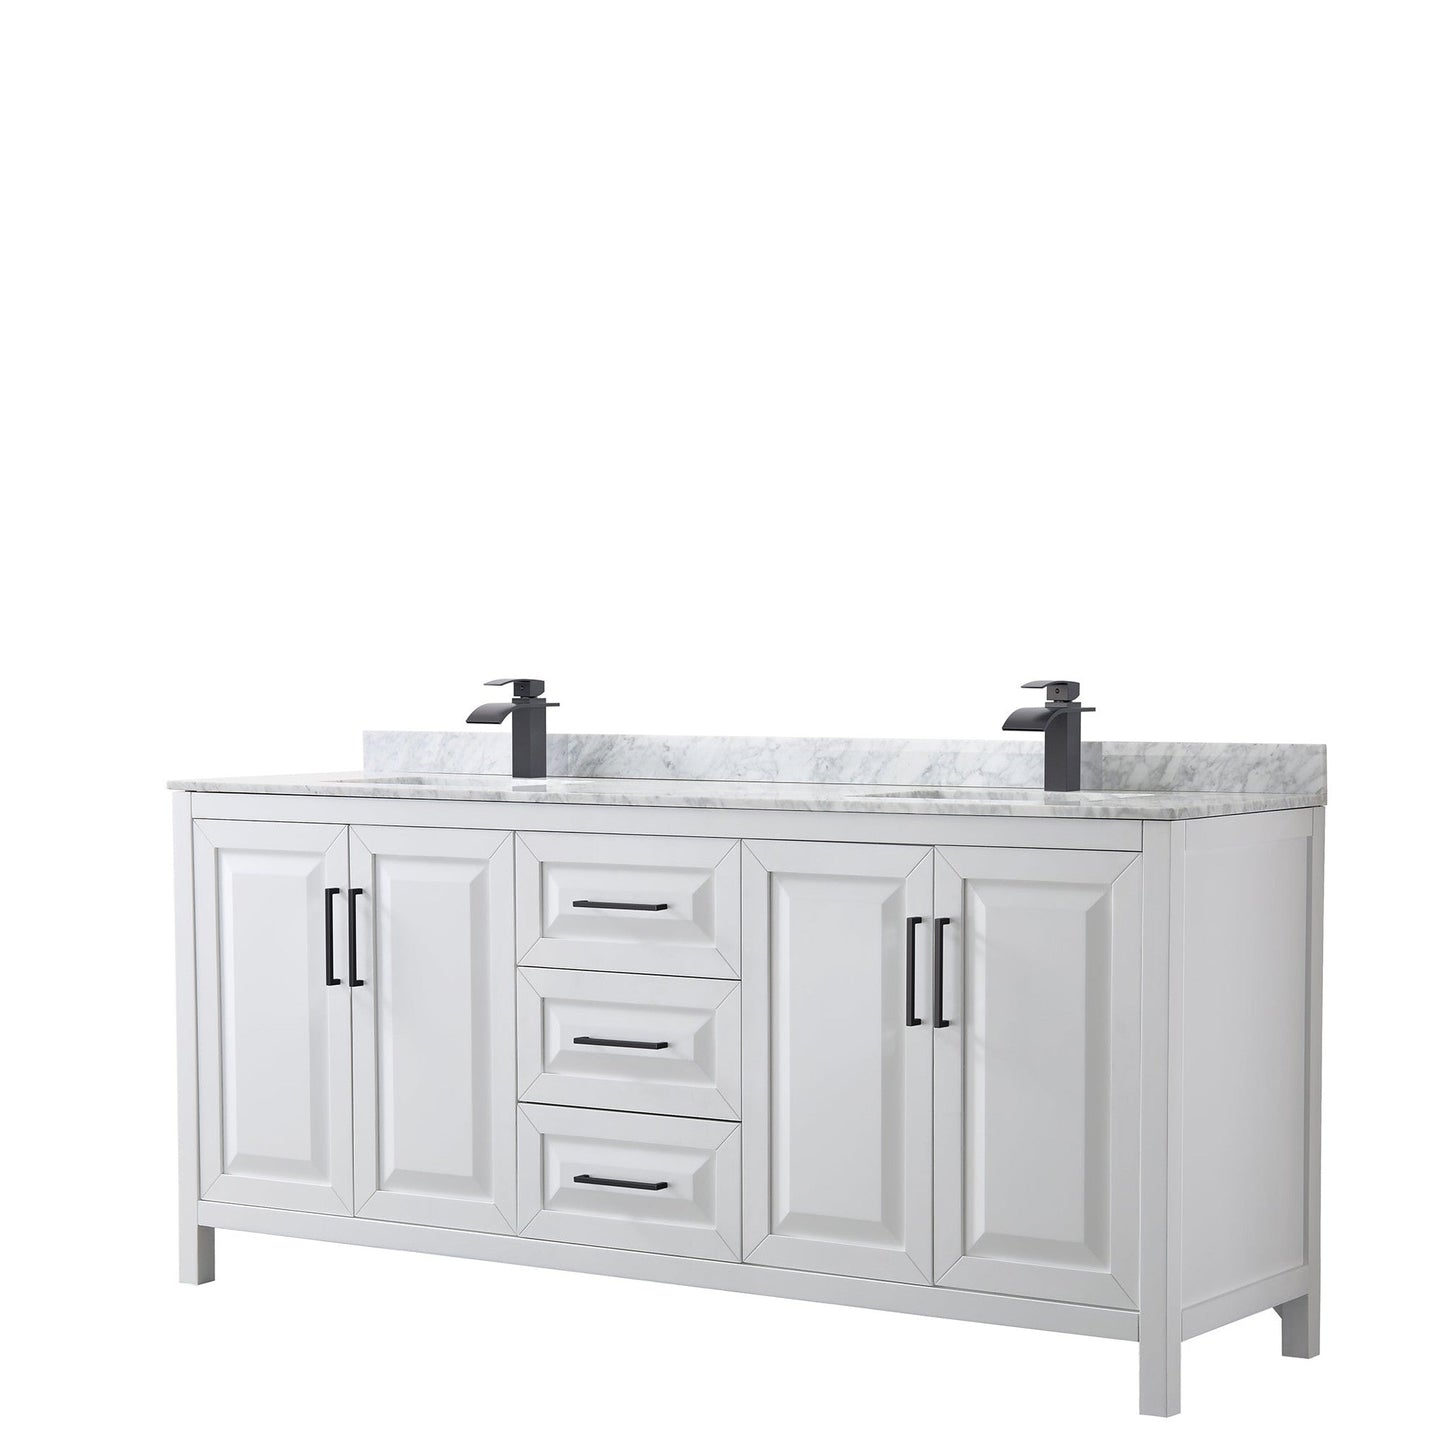 Daria 80" Double Bathroom Vanity in White, White Carrara Marble Countertop, Undermount Square Sinks, Matte Black Trim